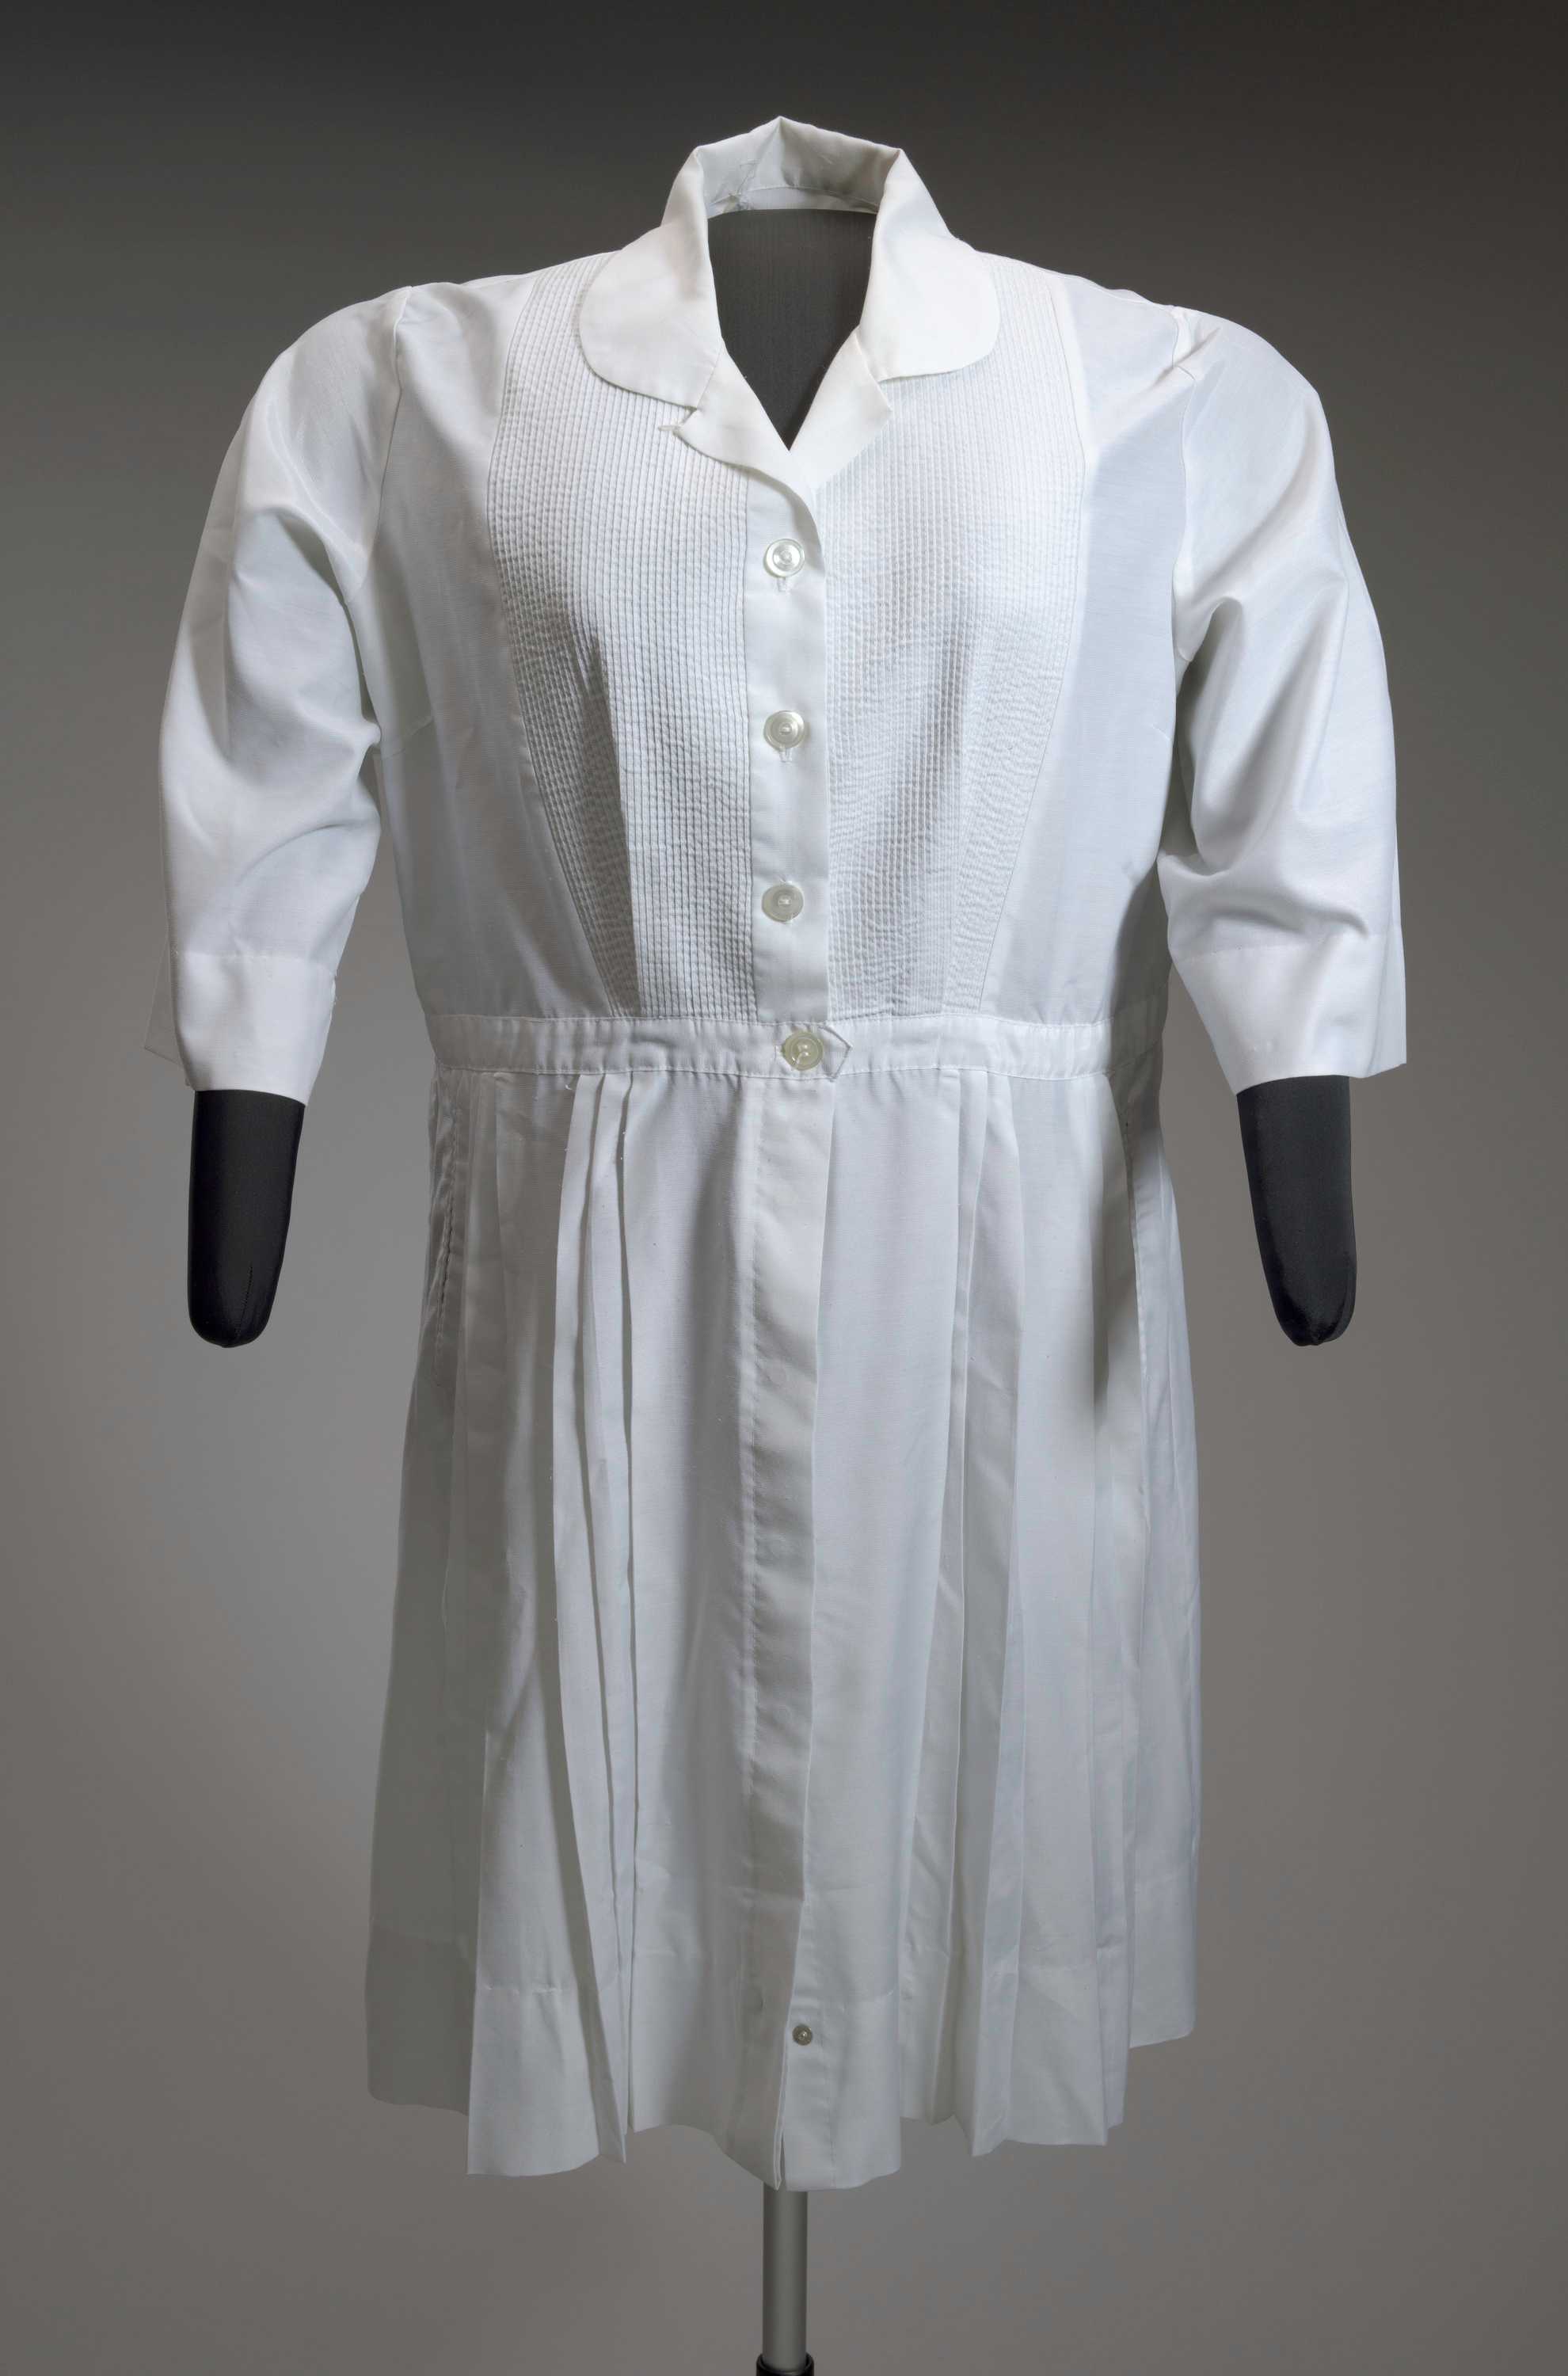 A white midwife's uniform overdress worn by Amanda Carey Carter.